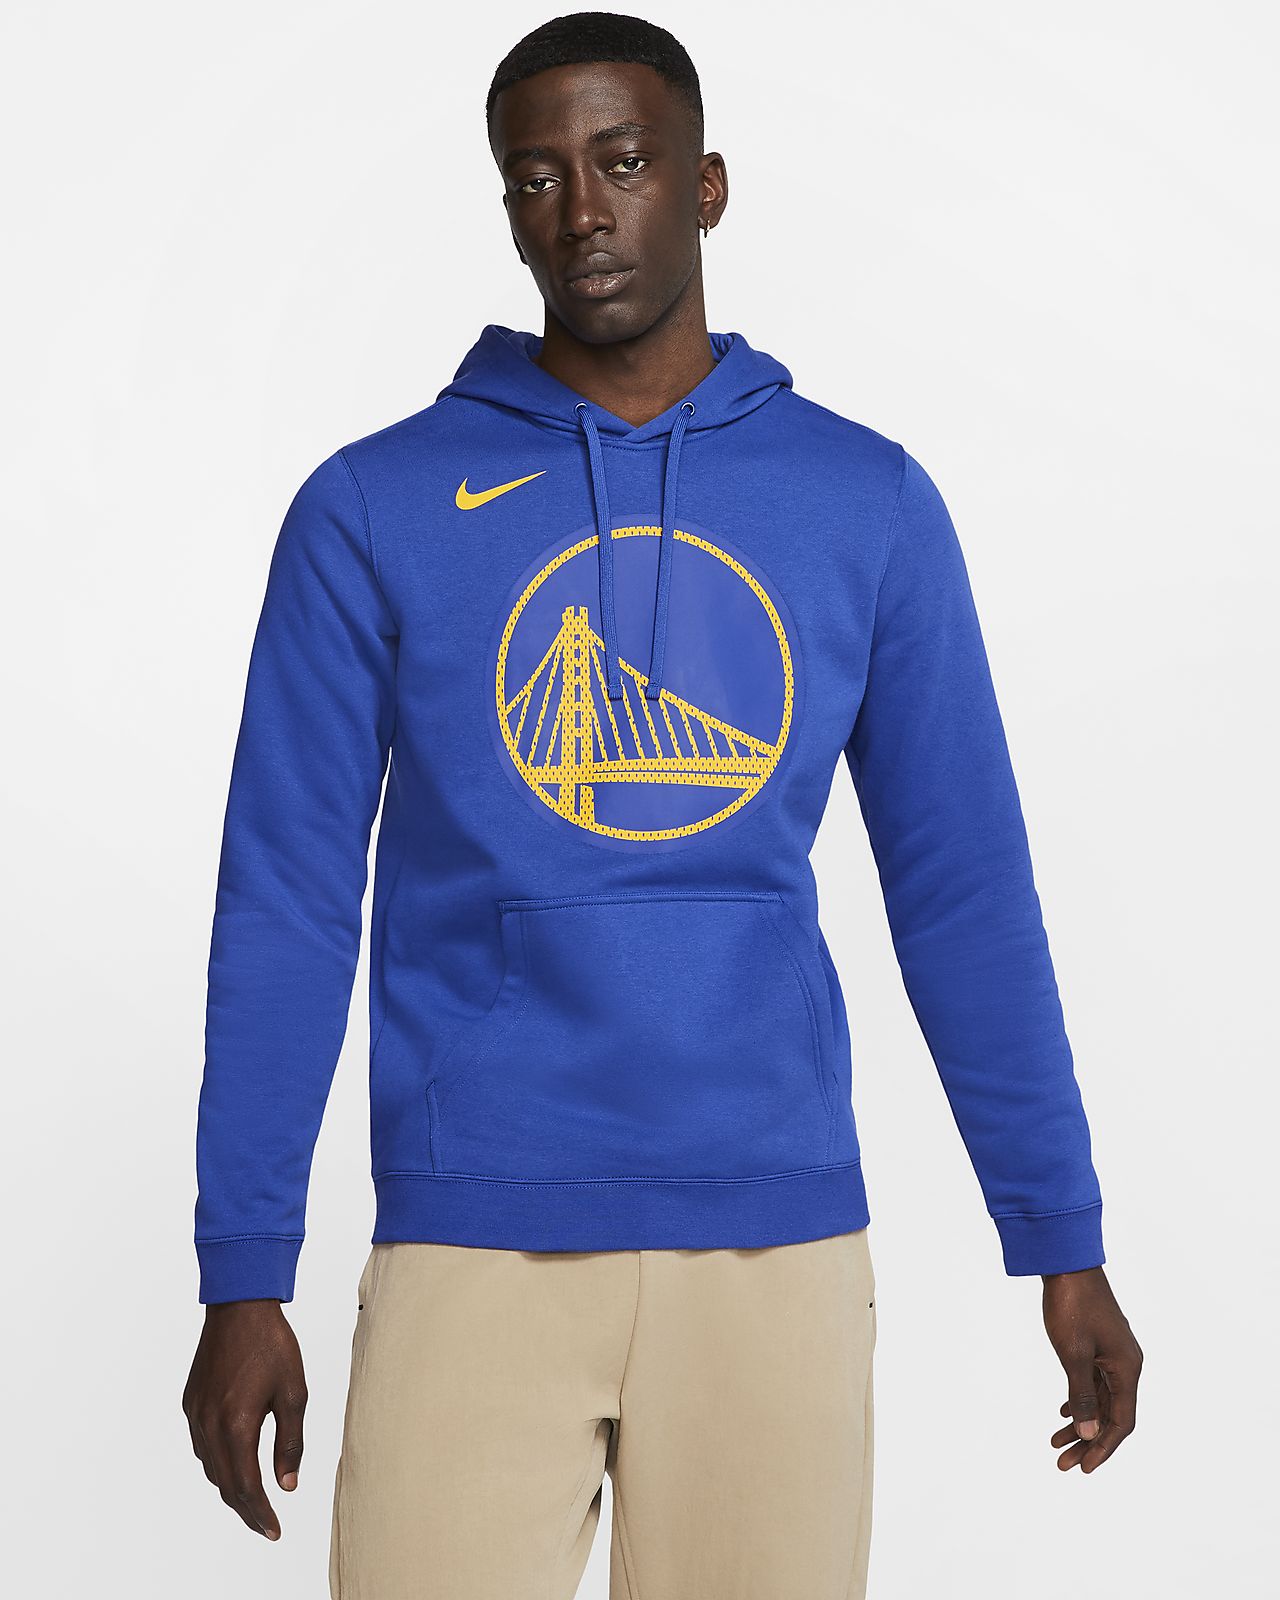 warriors basketball sweatshirts